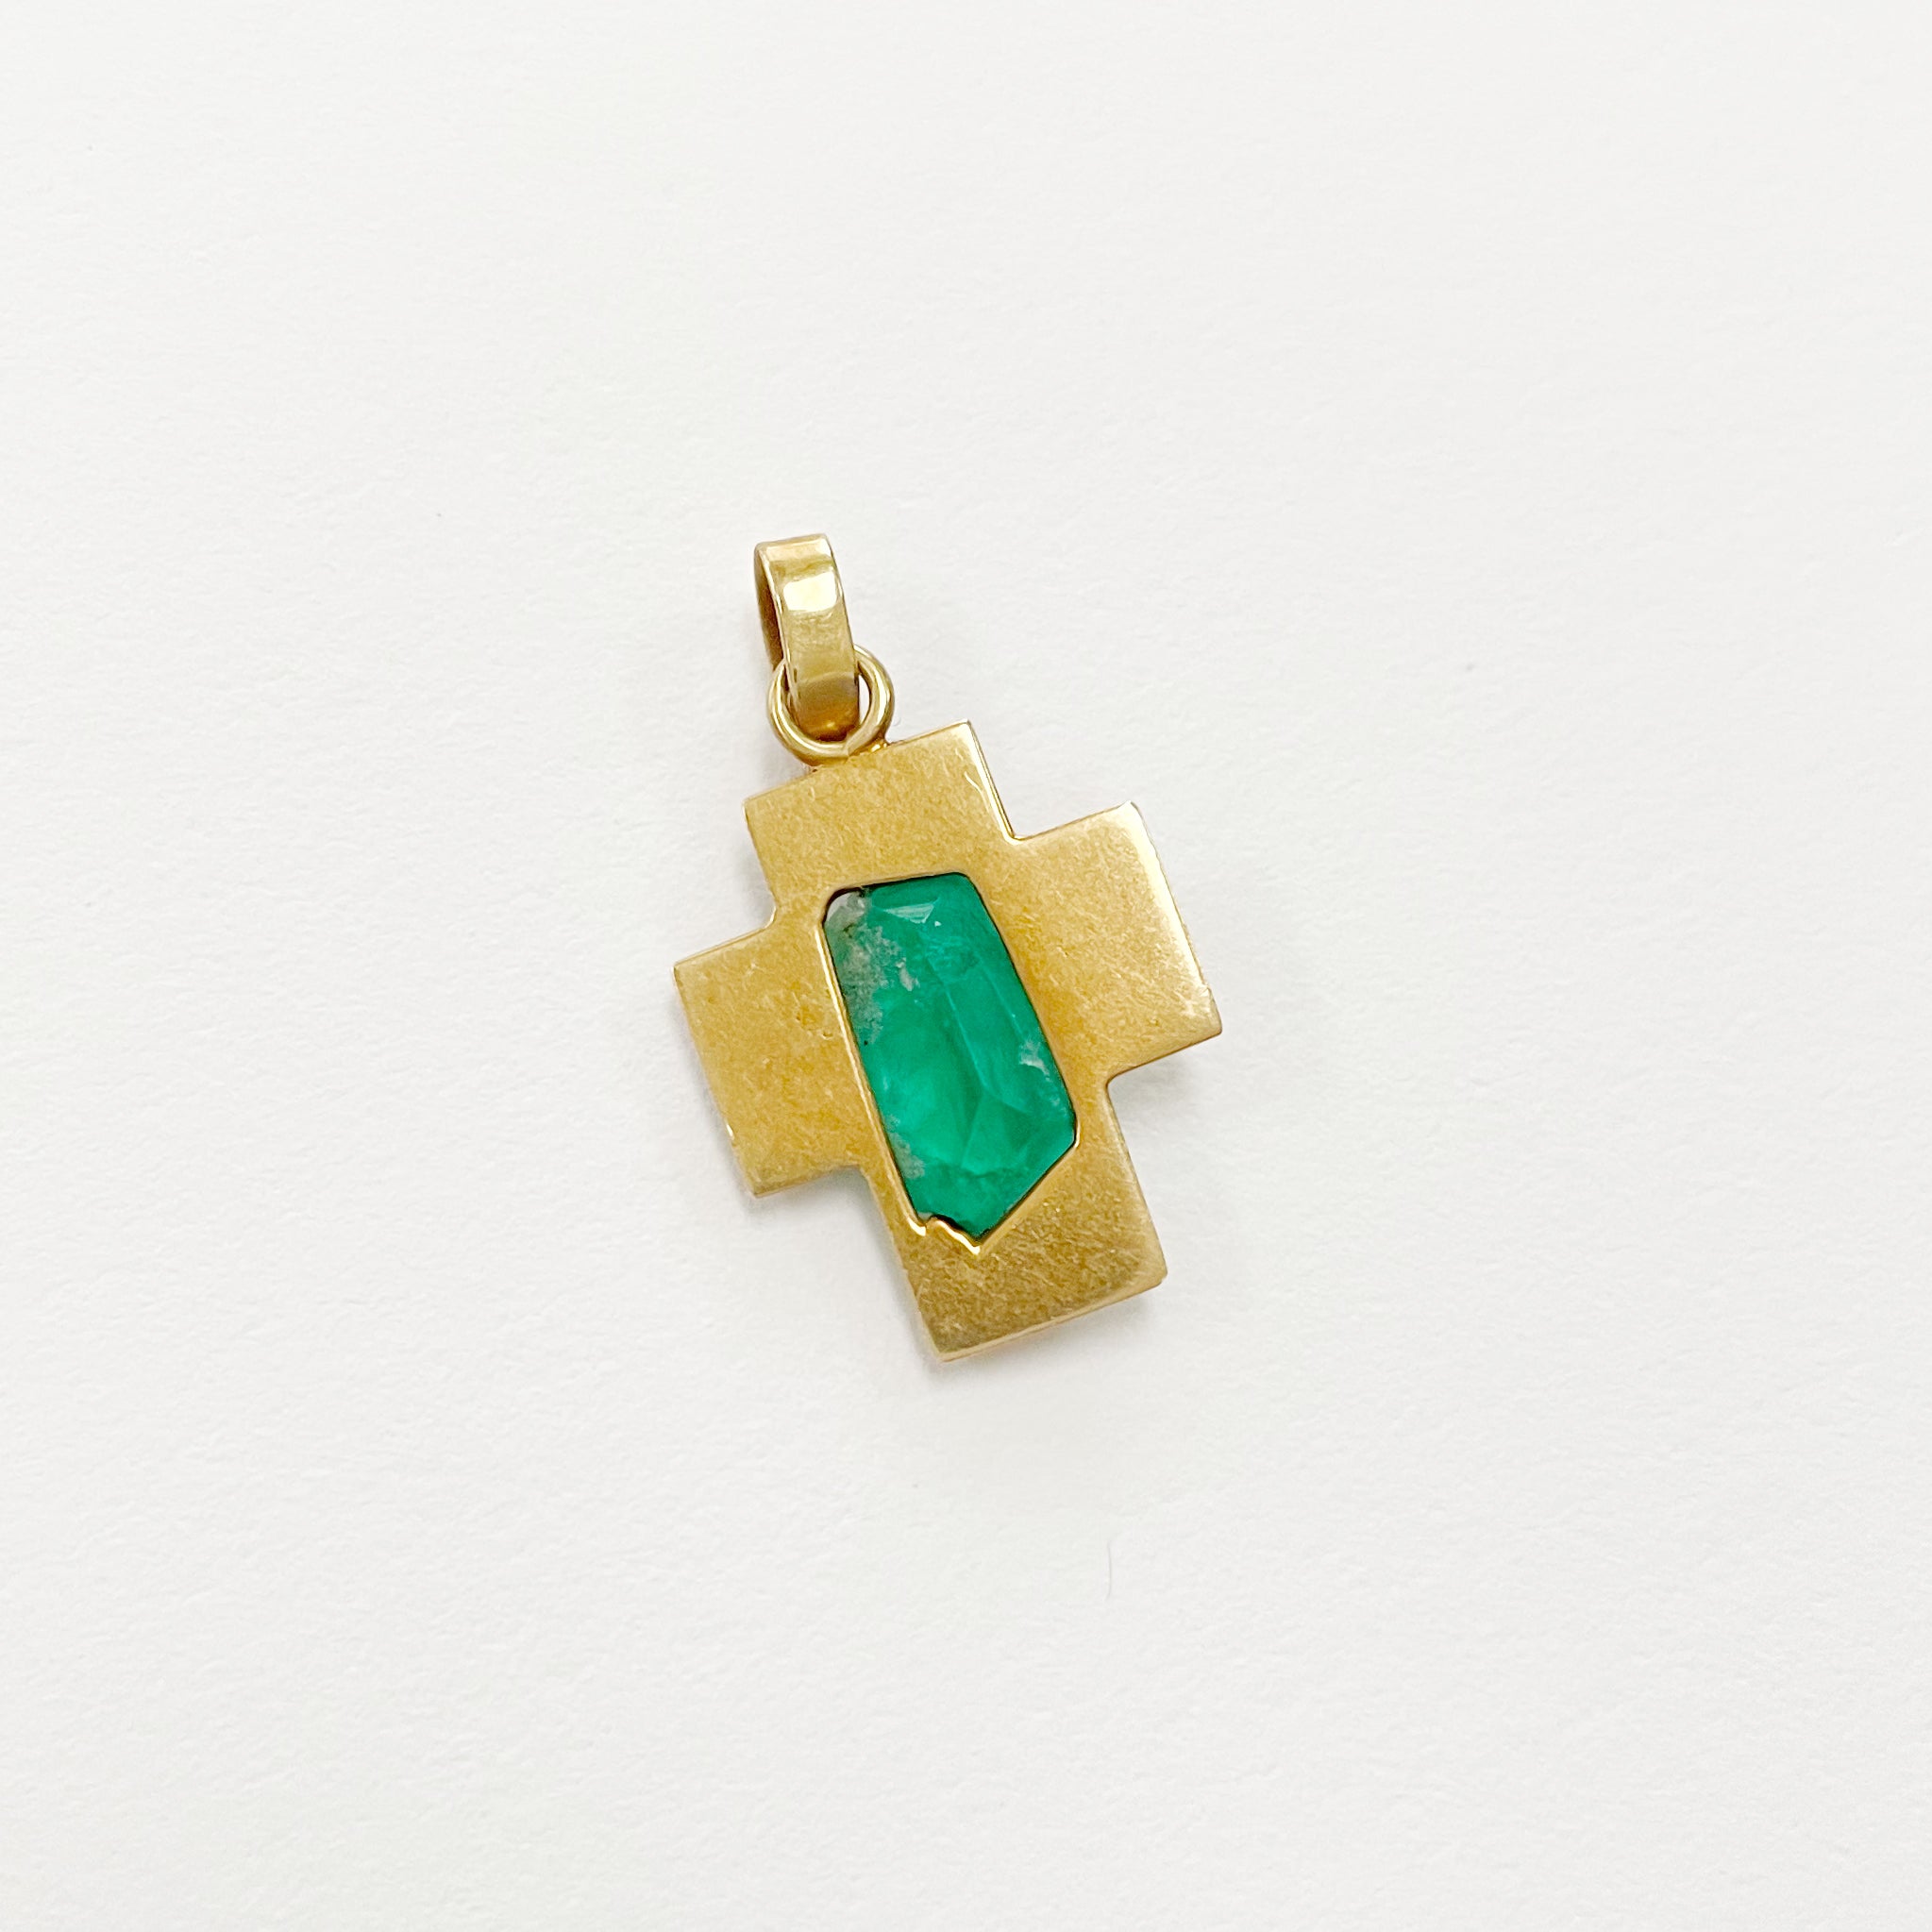 Vintage 18K Cross with Emerald Christ